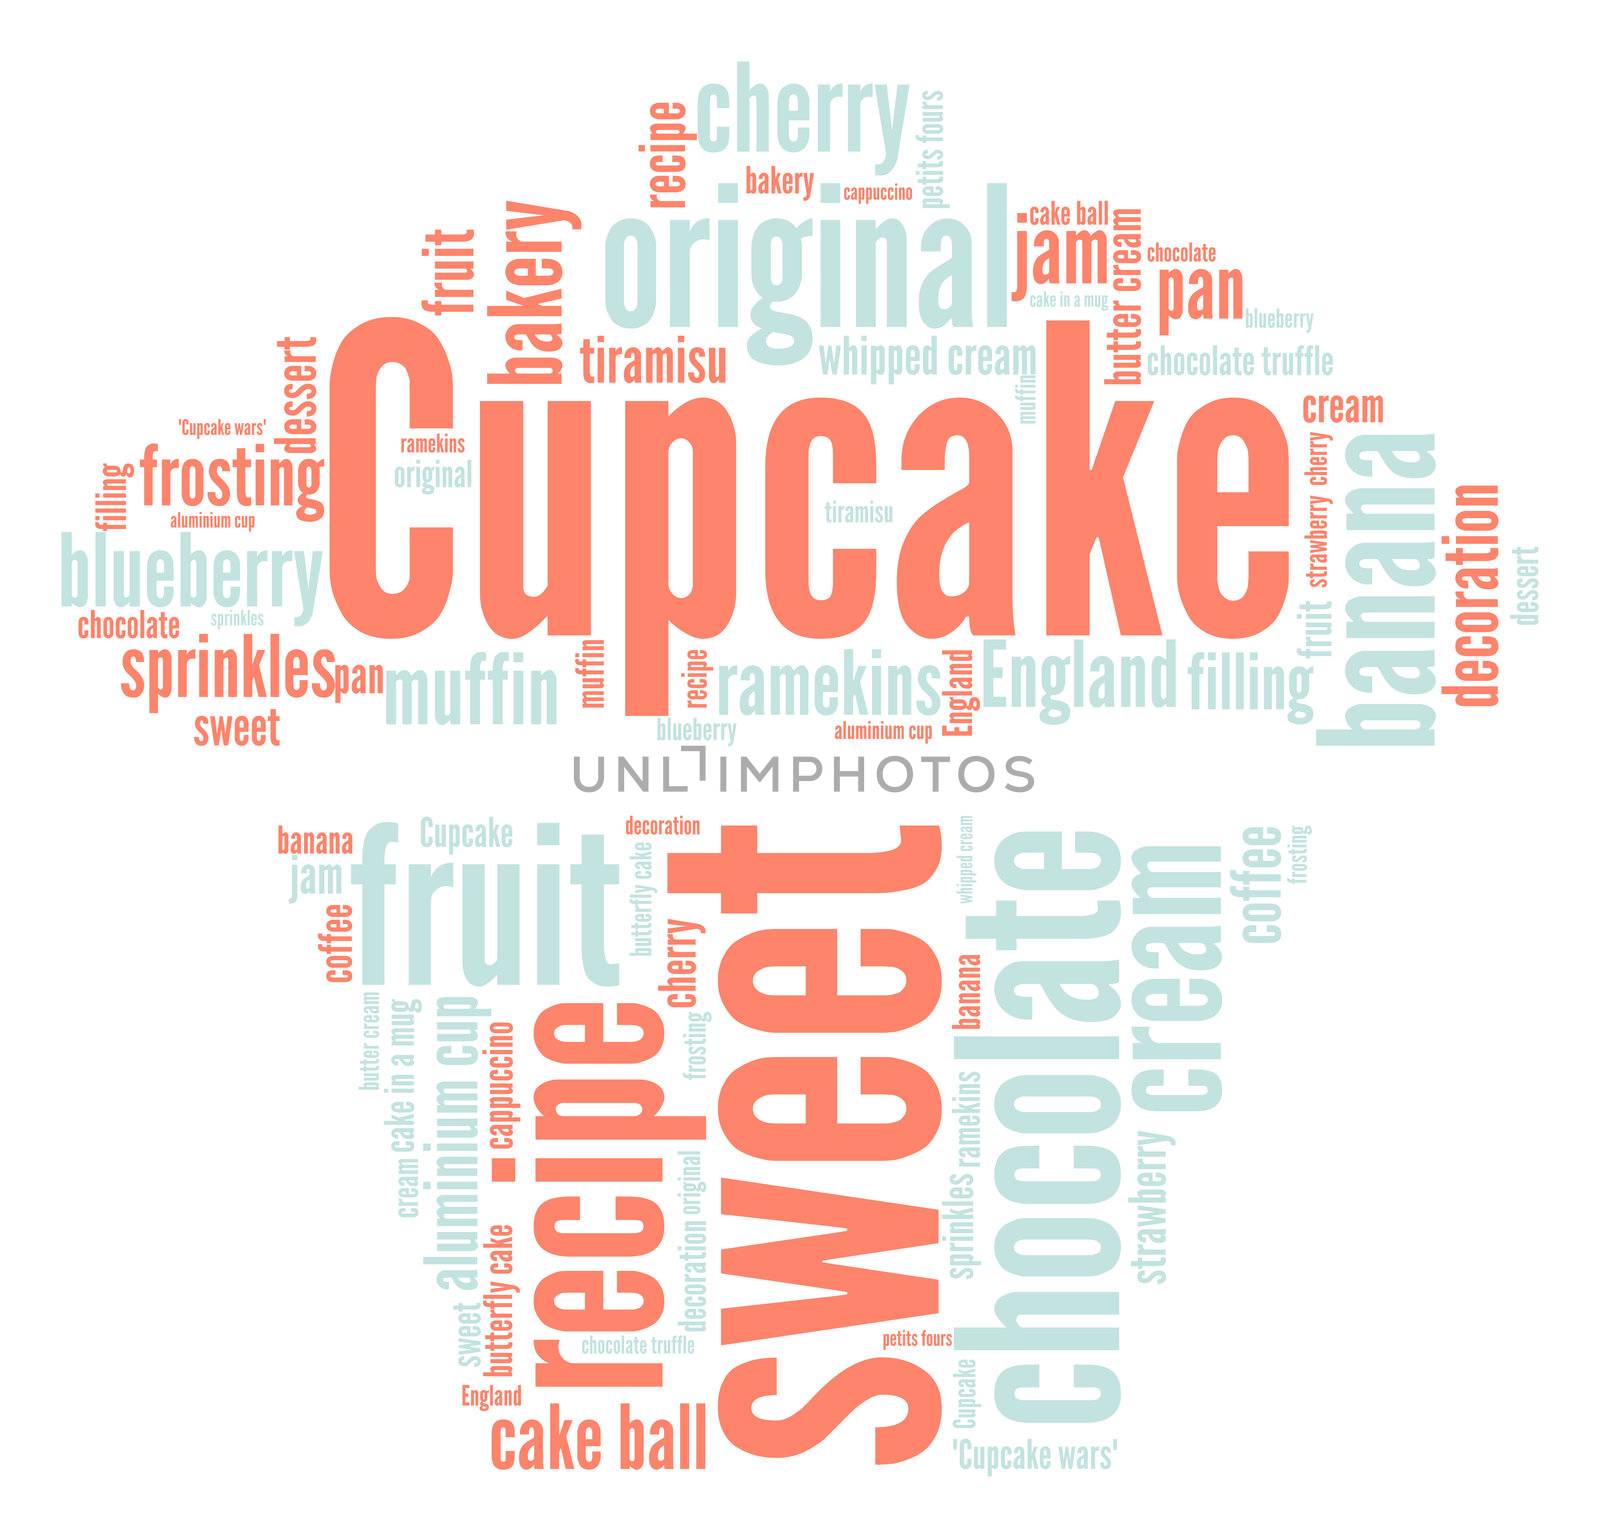 Cupcake icon by Refugeek